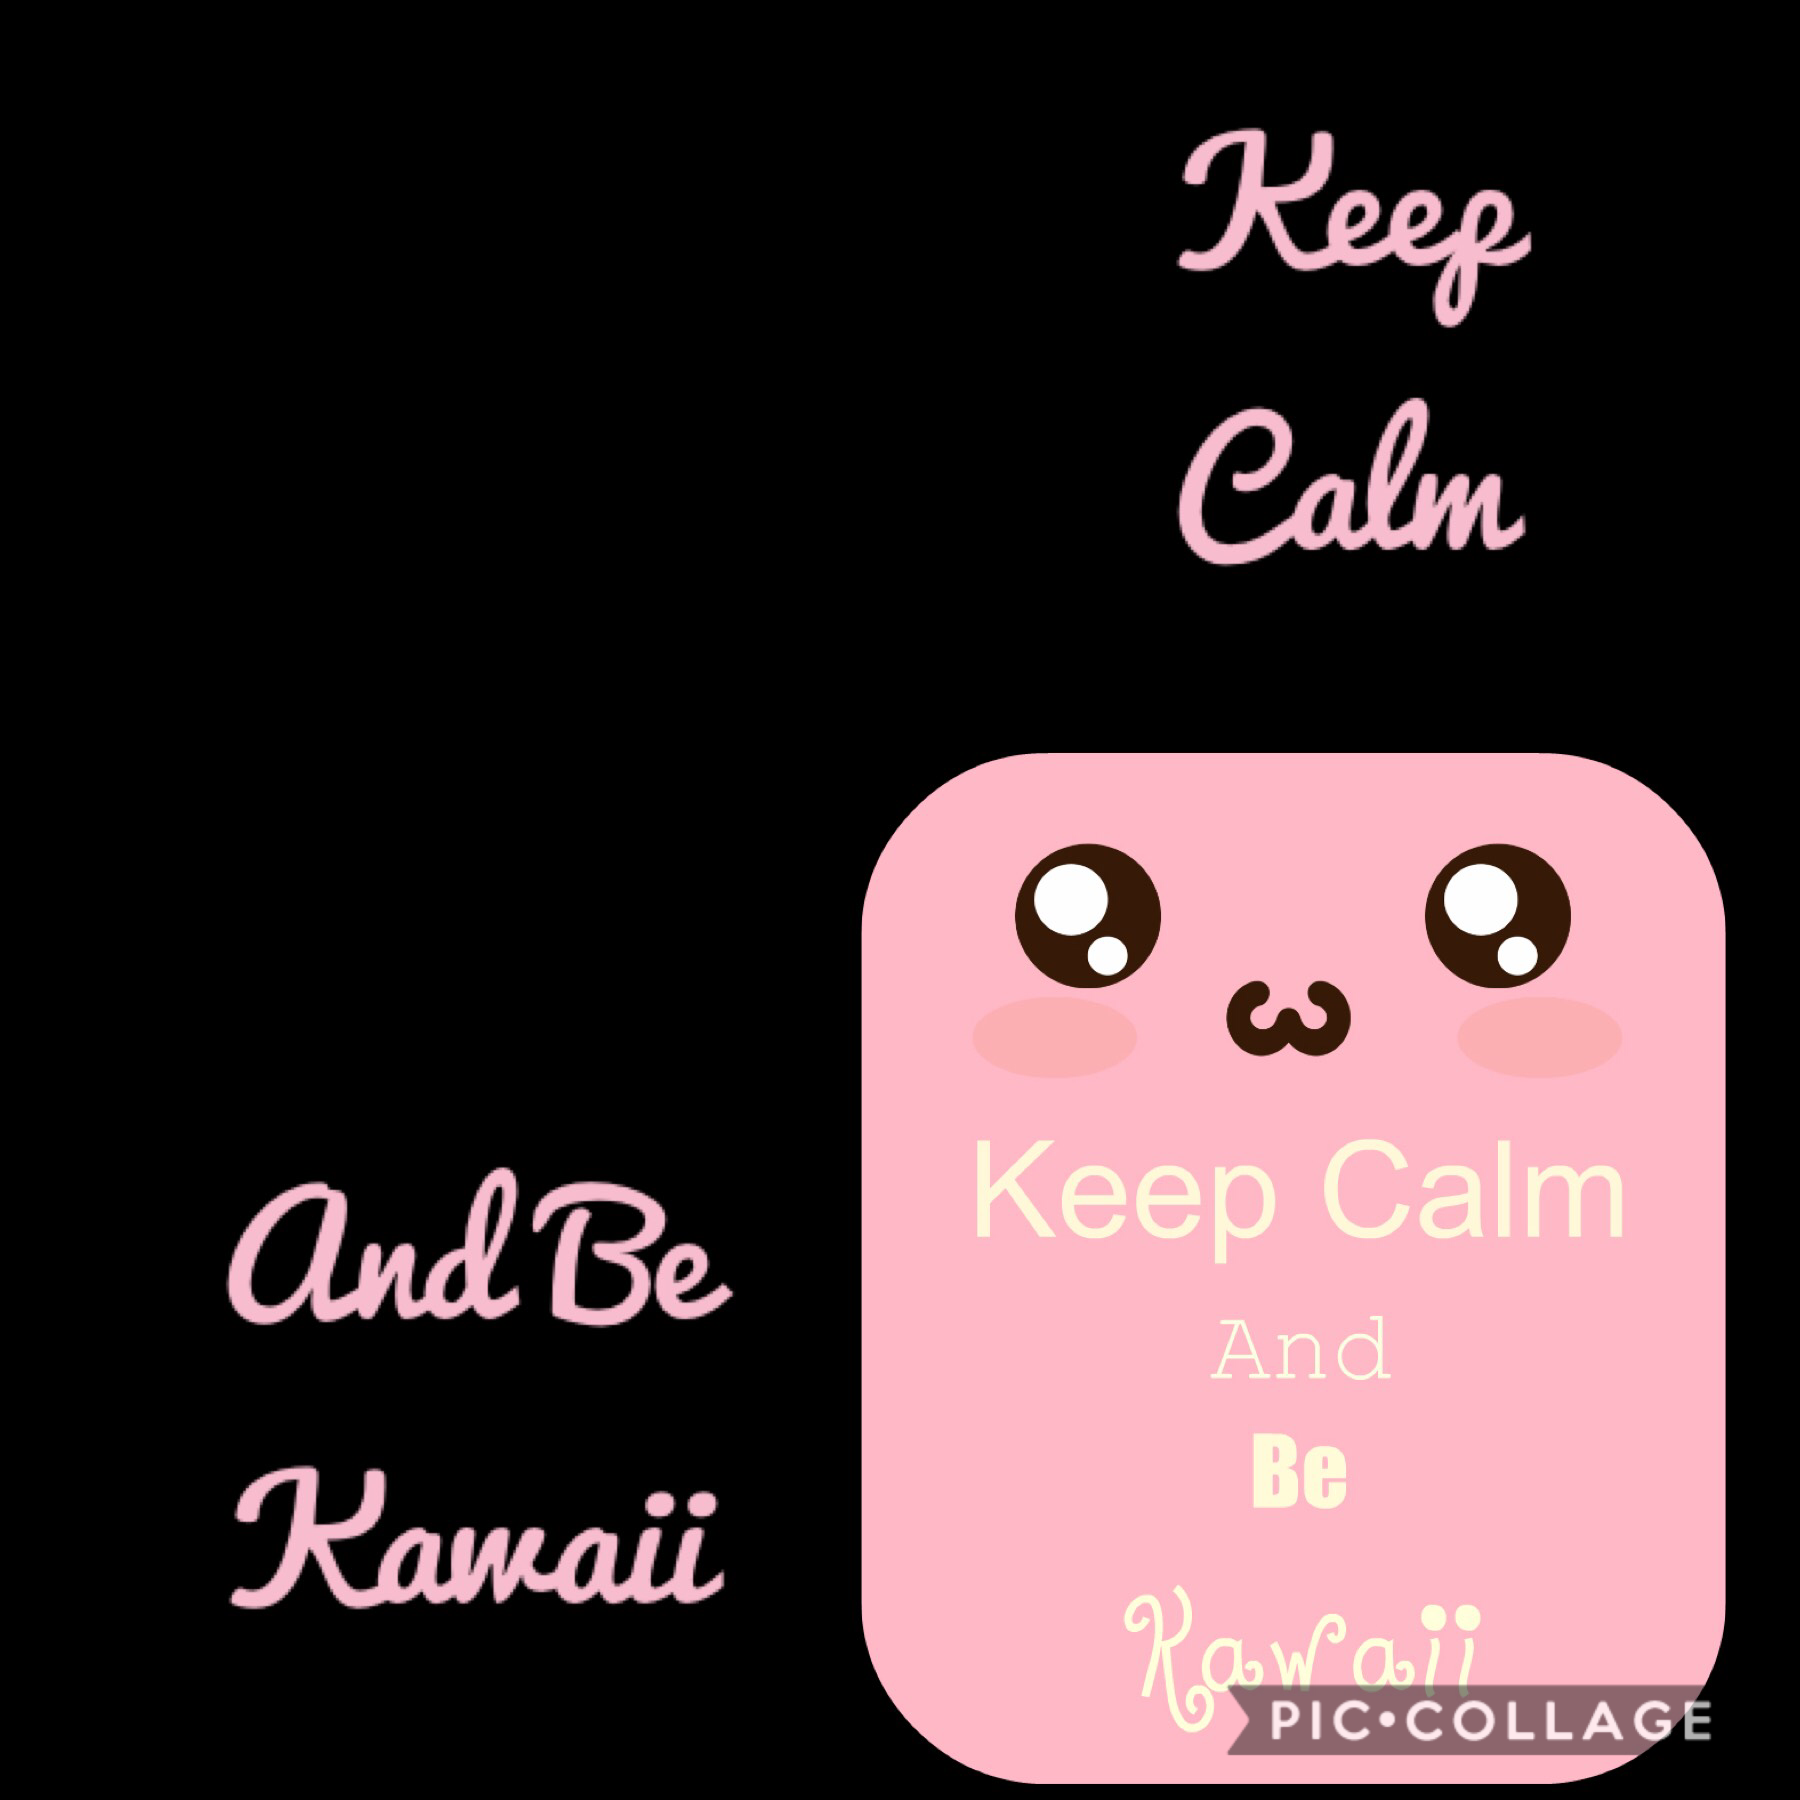 Keep Calm And Be Kawaii!!!